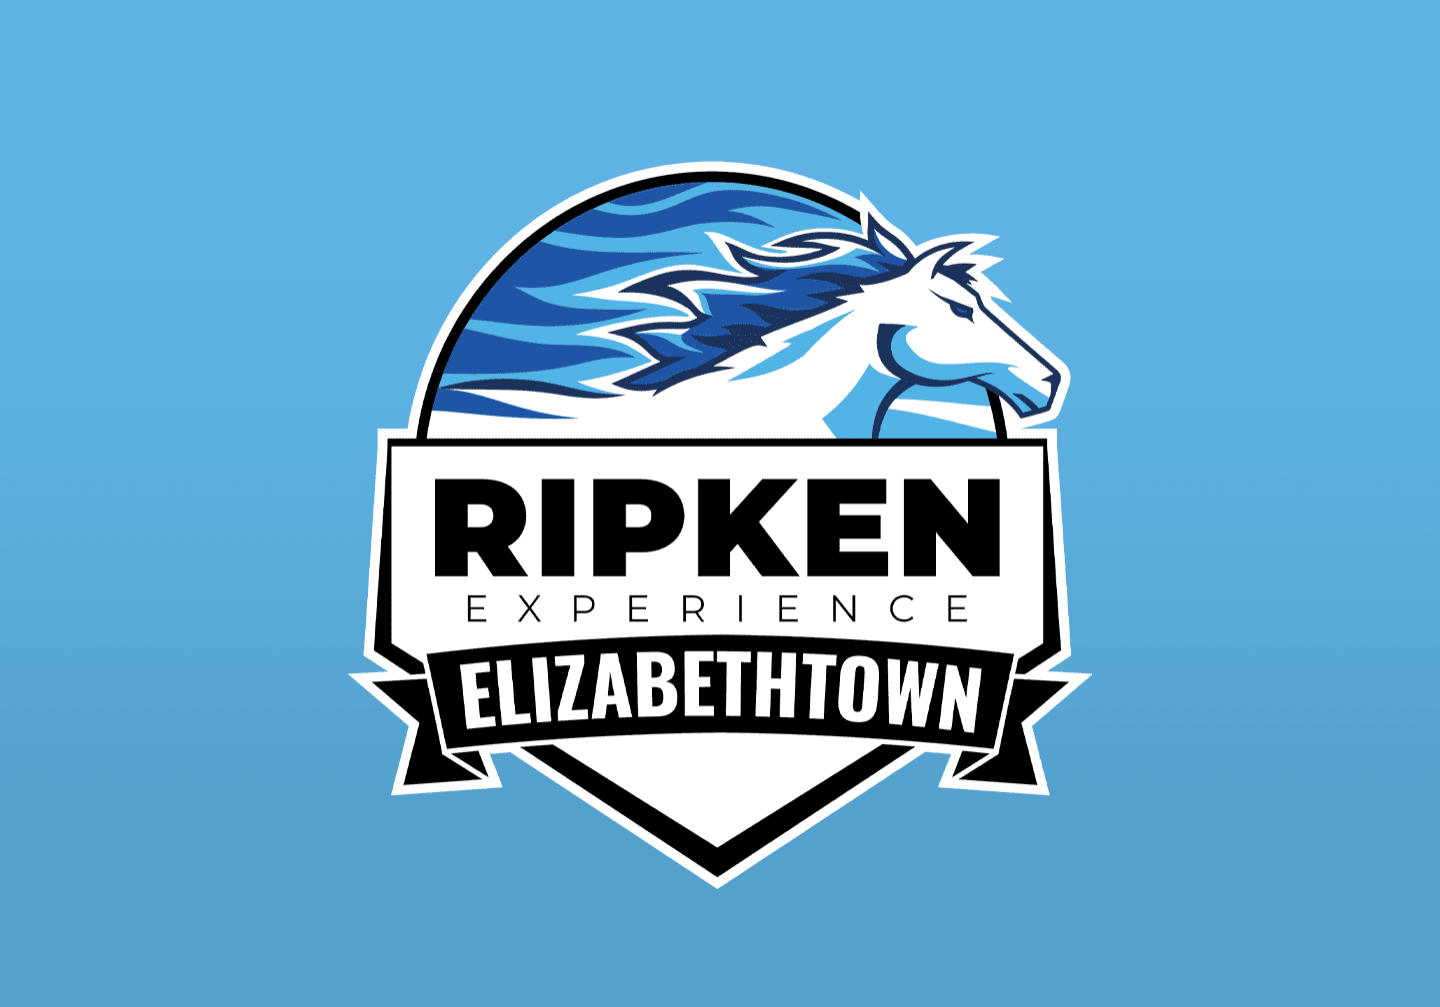 The Ripken Experience Elizabethtown, Kentucky